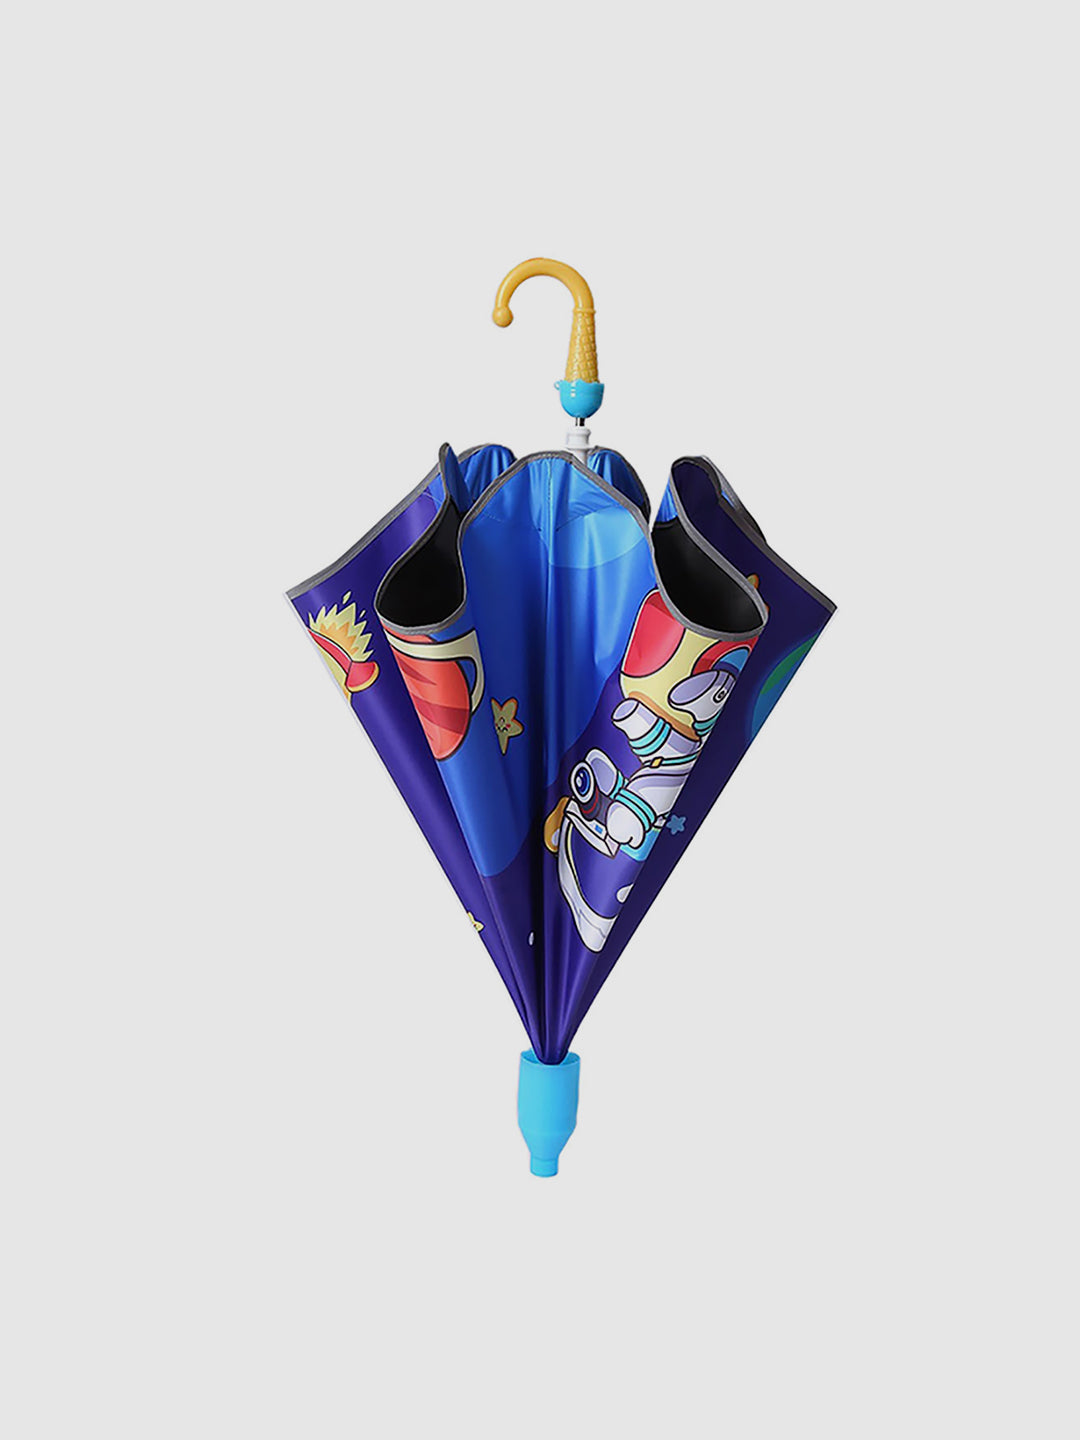 Little Surprise Box Canopy Shape Umbrella for Kids